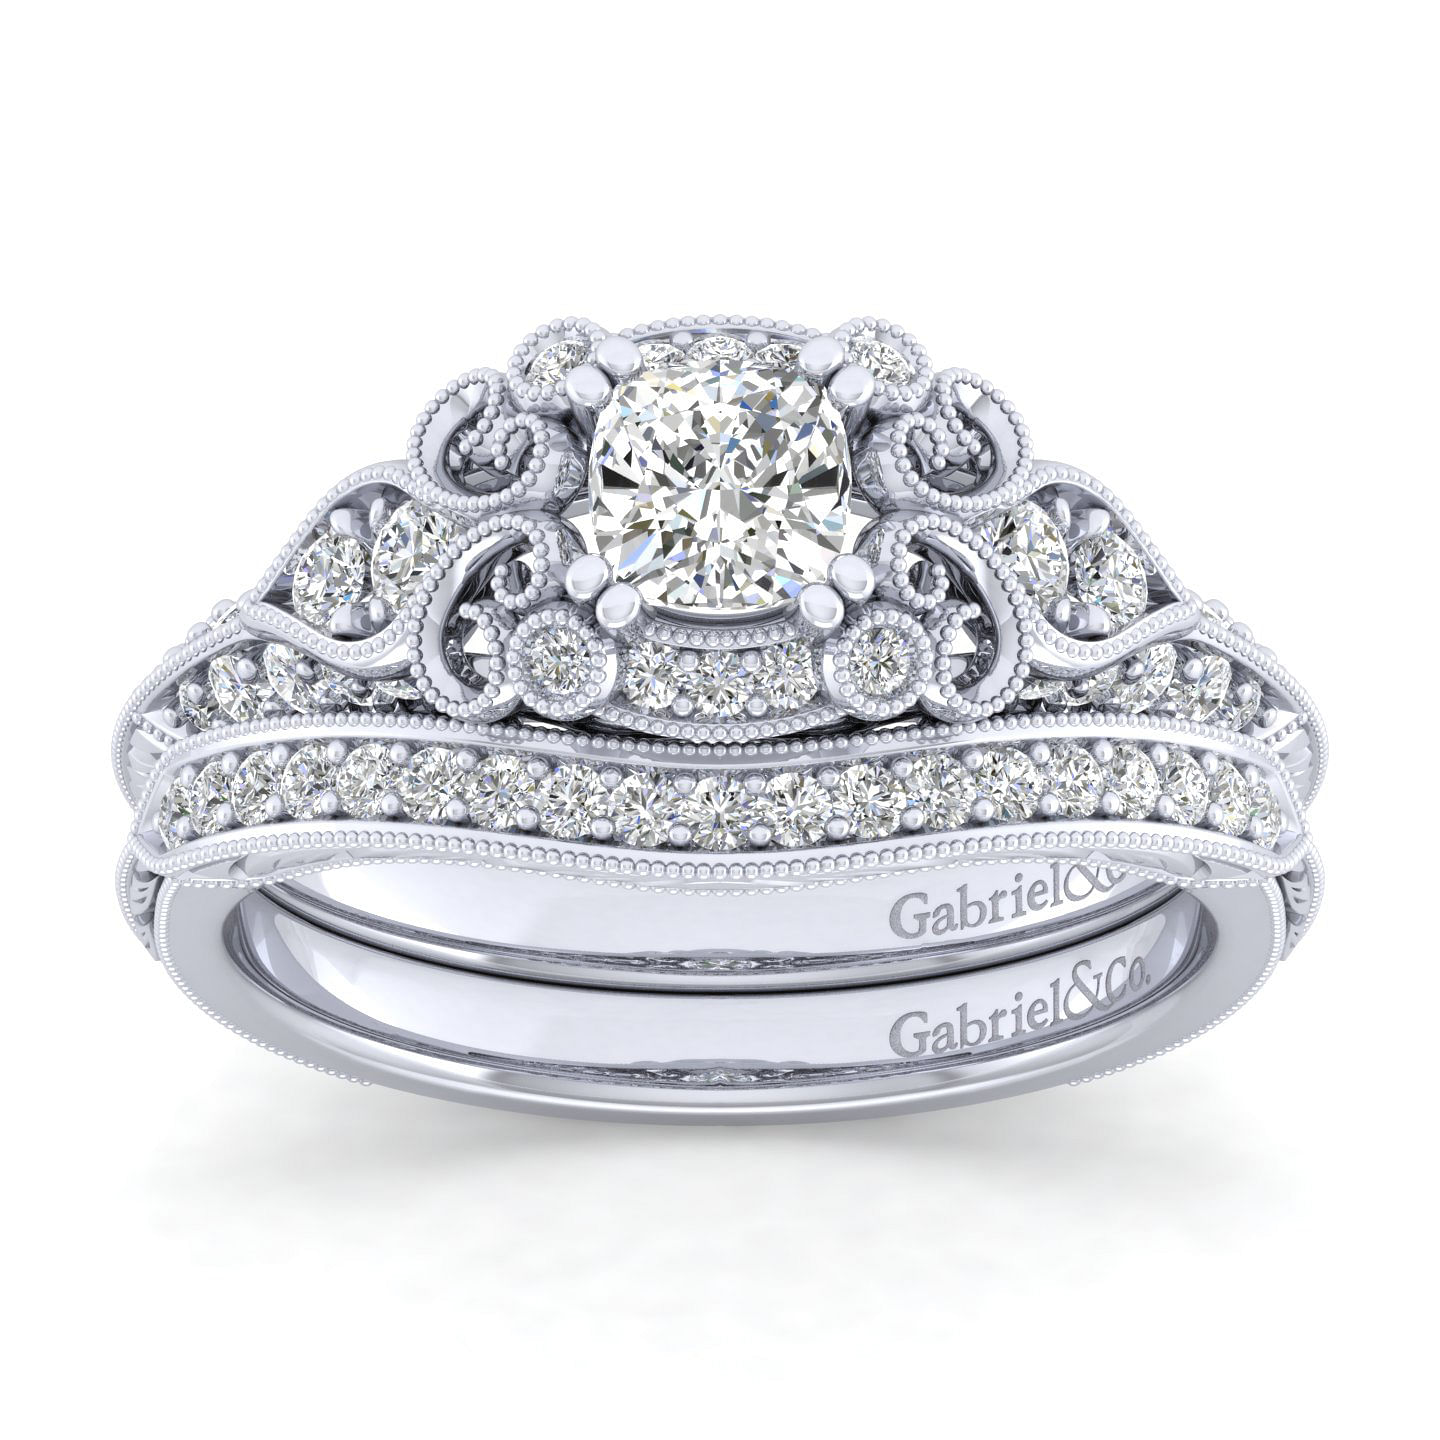 Unique 14K White Gold Vintage Inspired Cushion Cut Diamond Halo Engagement Ring